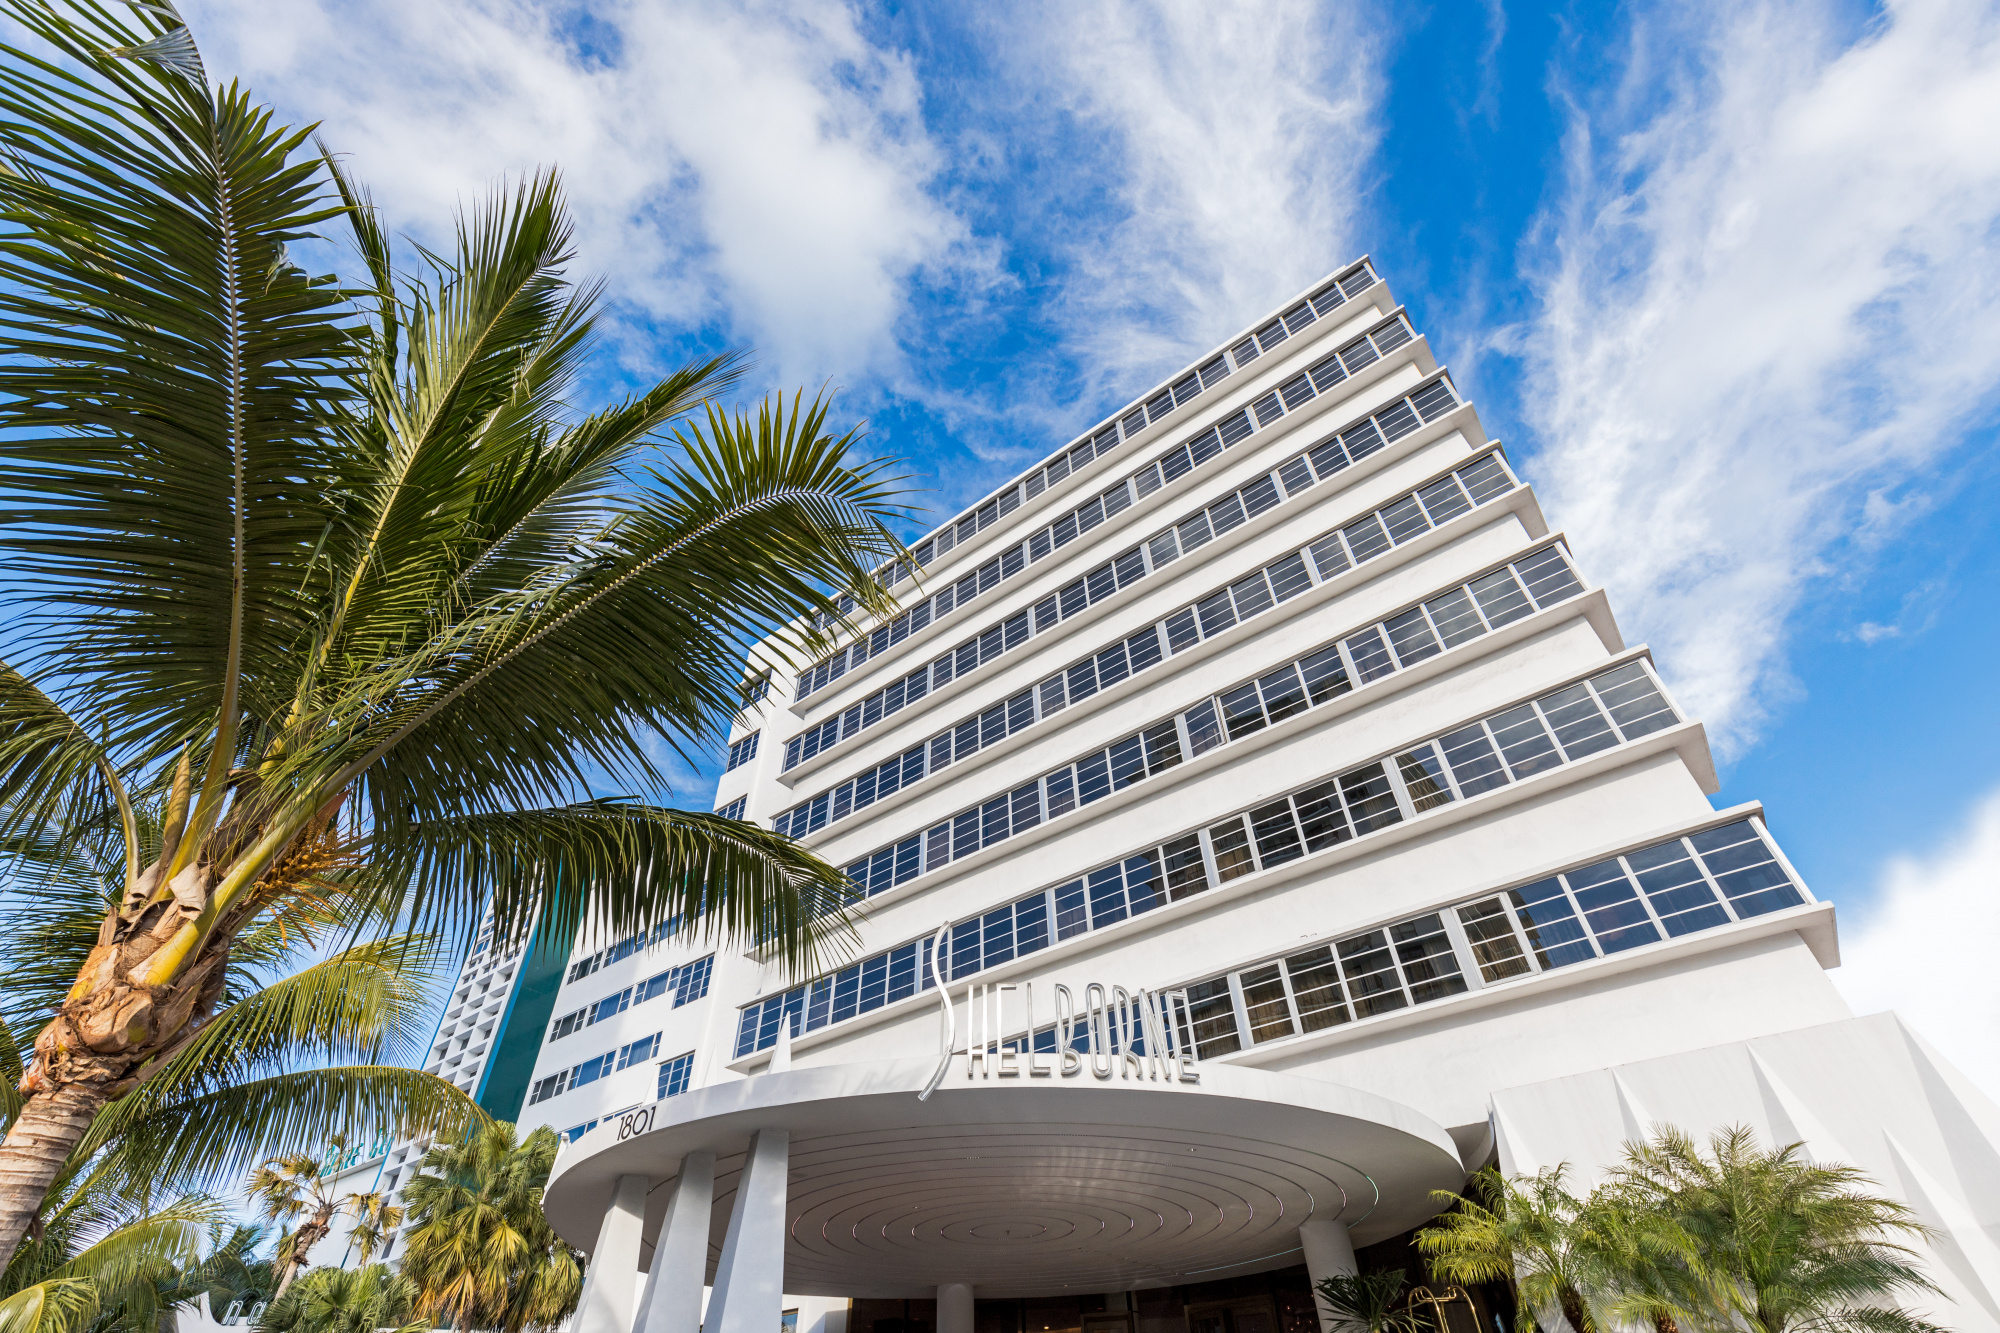 miami vacation guide, exterior view of the art deco hotel The Shelbourne in Miami Beach, Florida